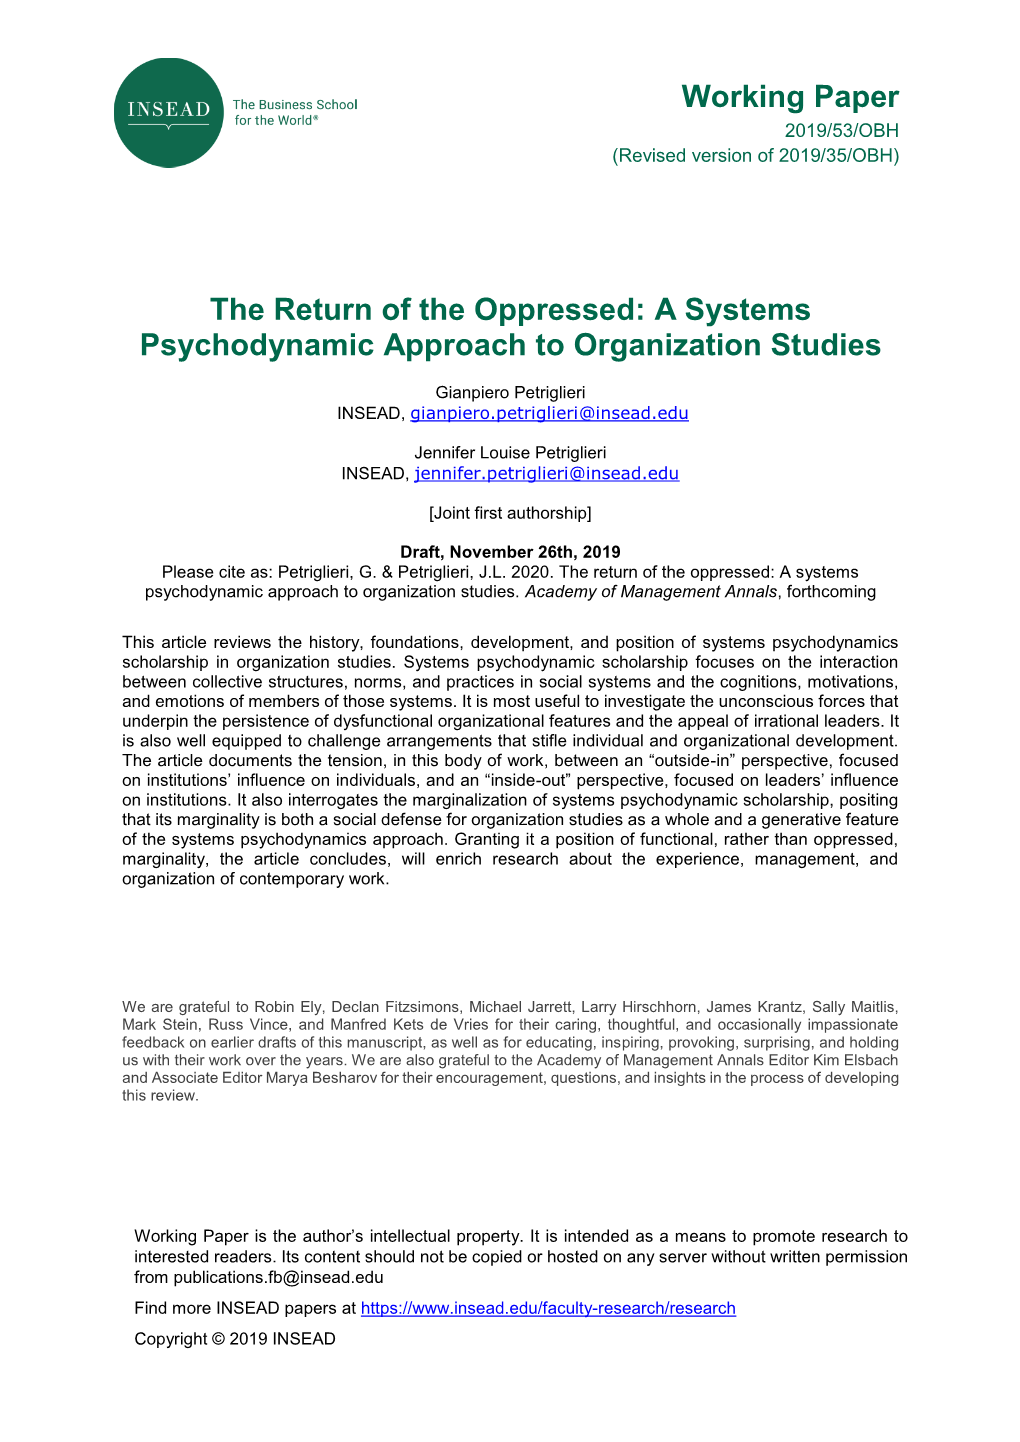 A Systems Psychodynamic Approach to Organization Studies